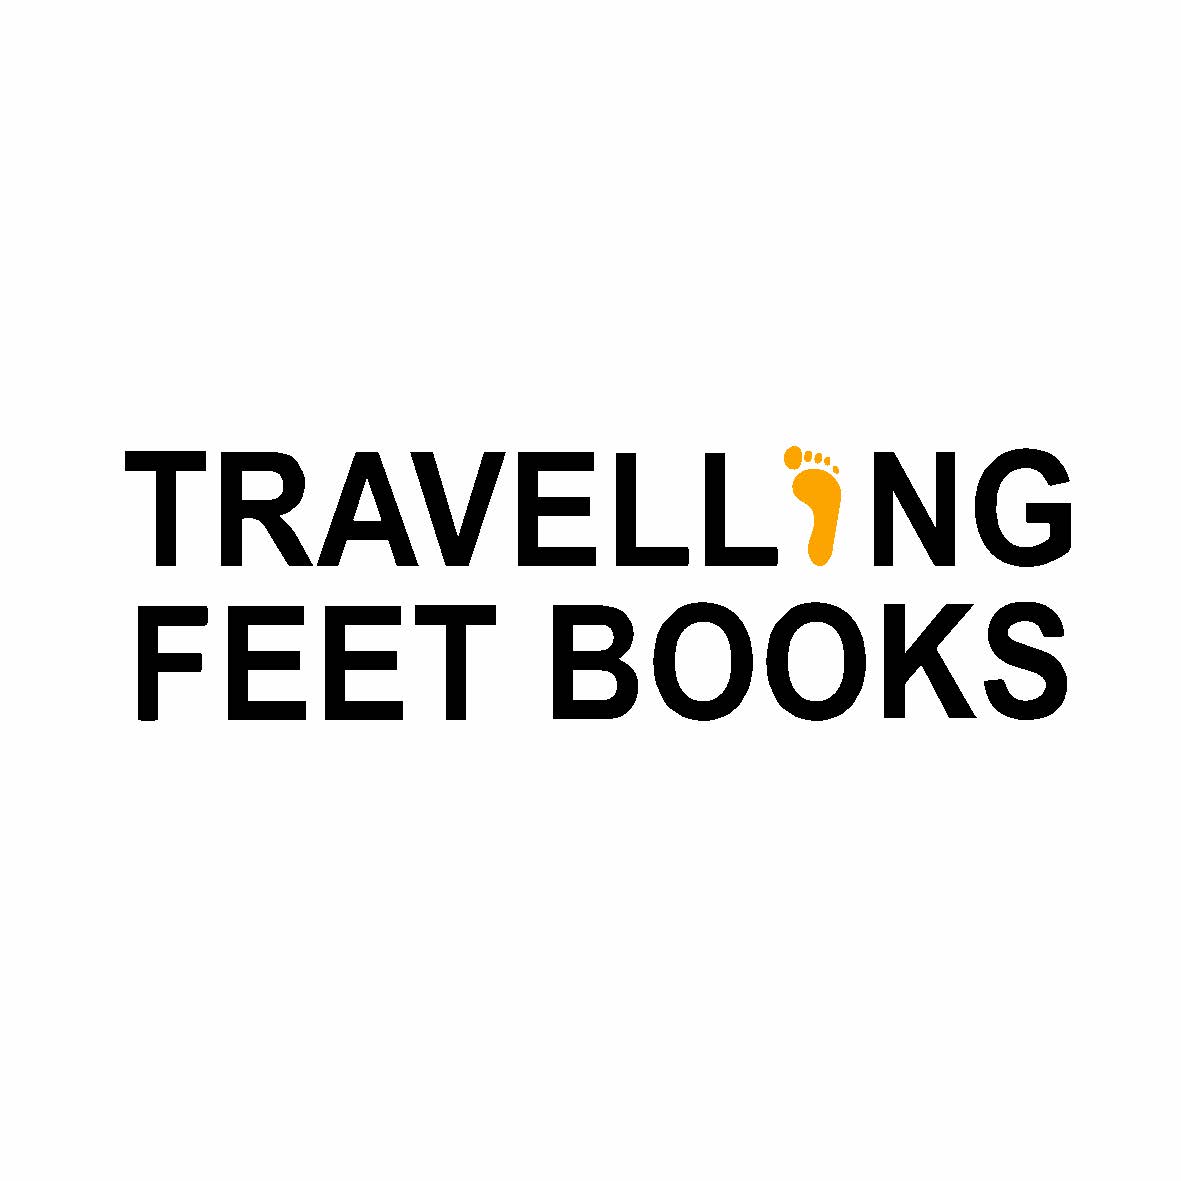 Travelling feet books